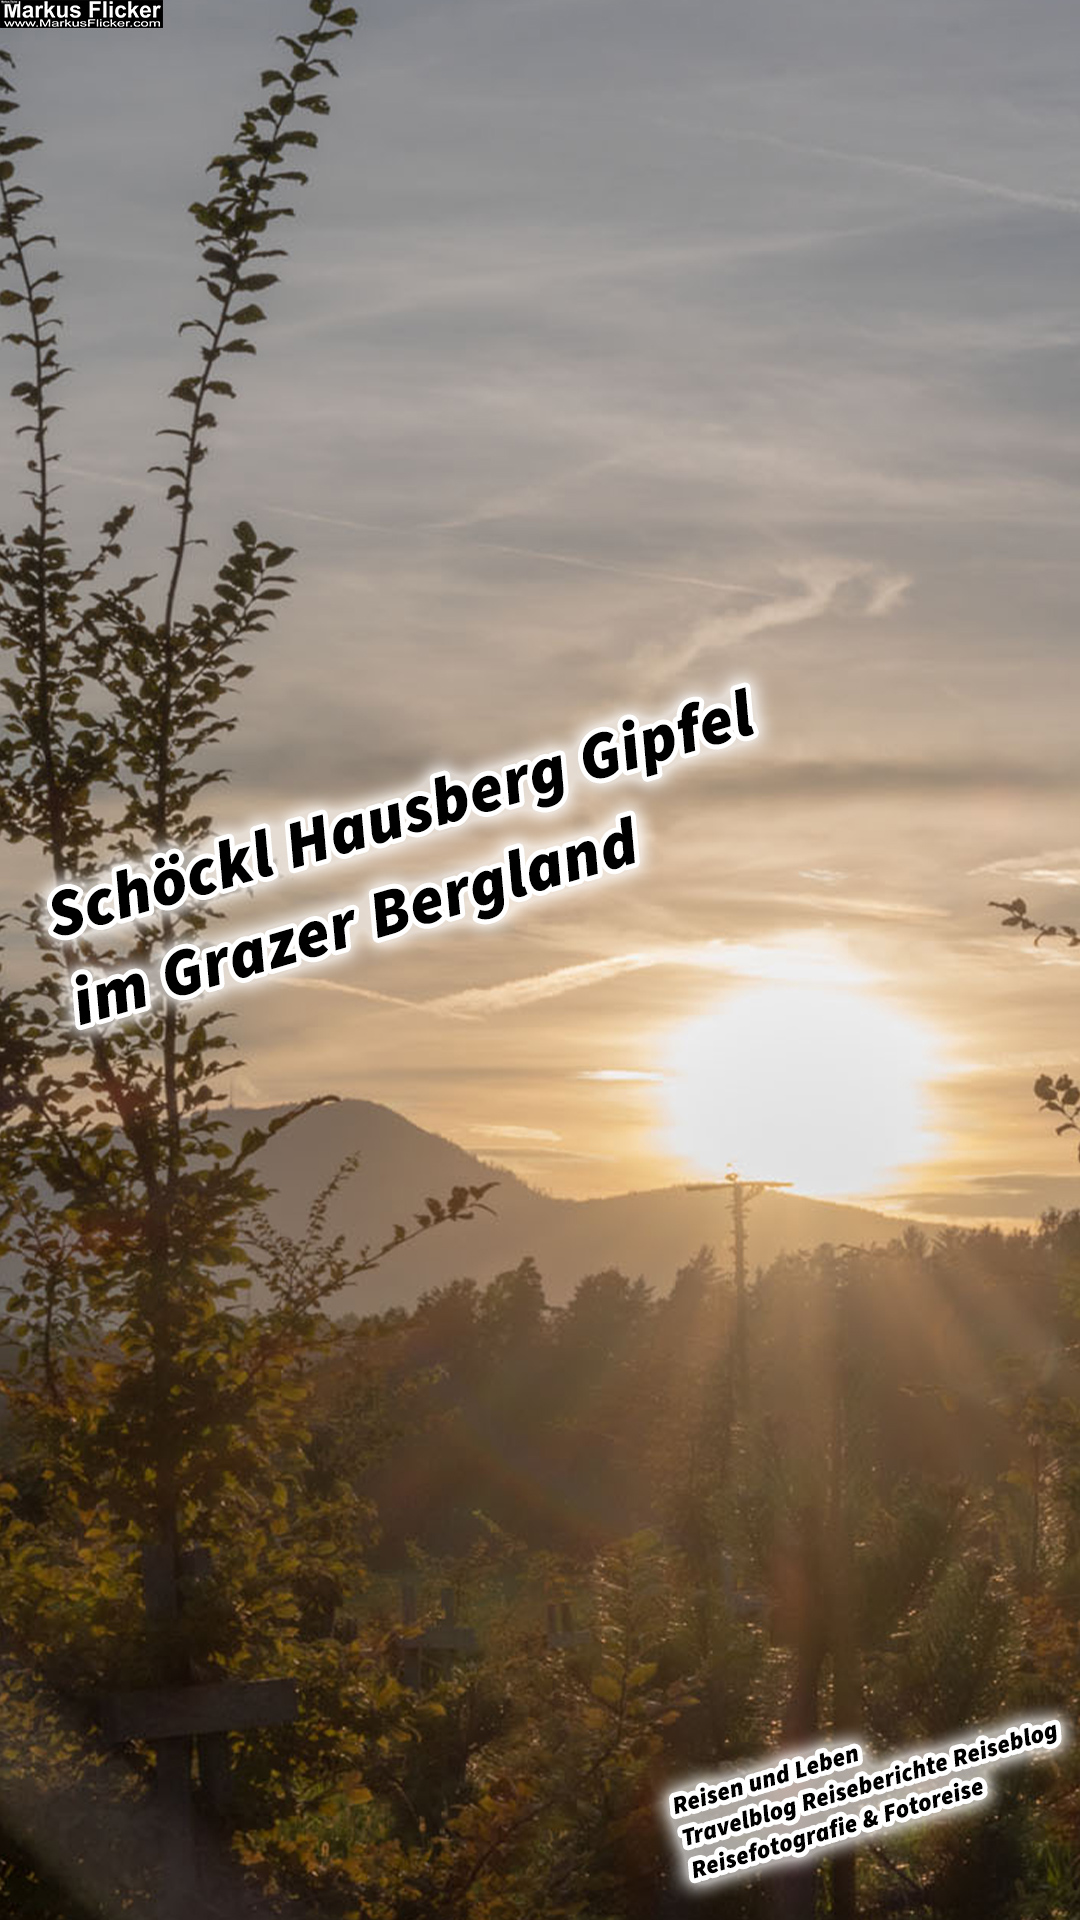 Schöckl Hausberg Gipfel im Grazer Bergland